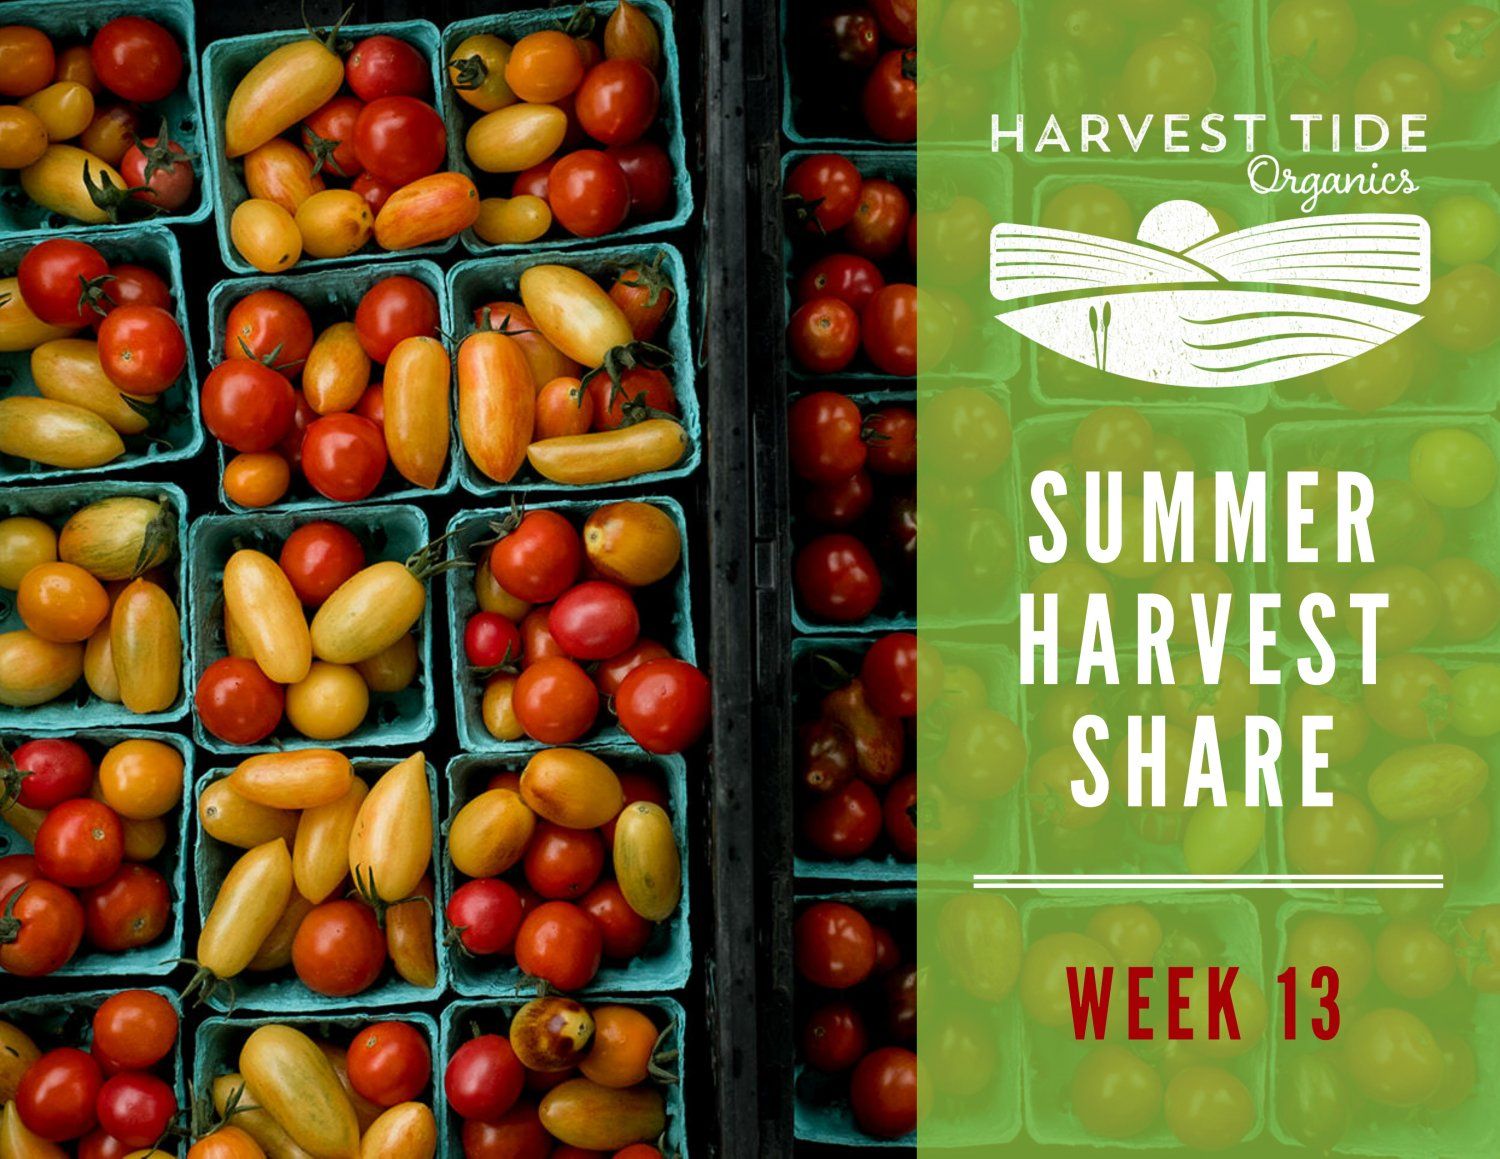 Next Happening: Summer Harvest Share - Week 13